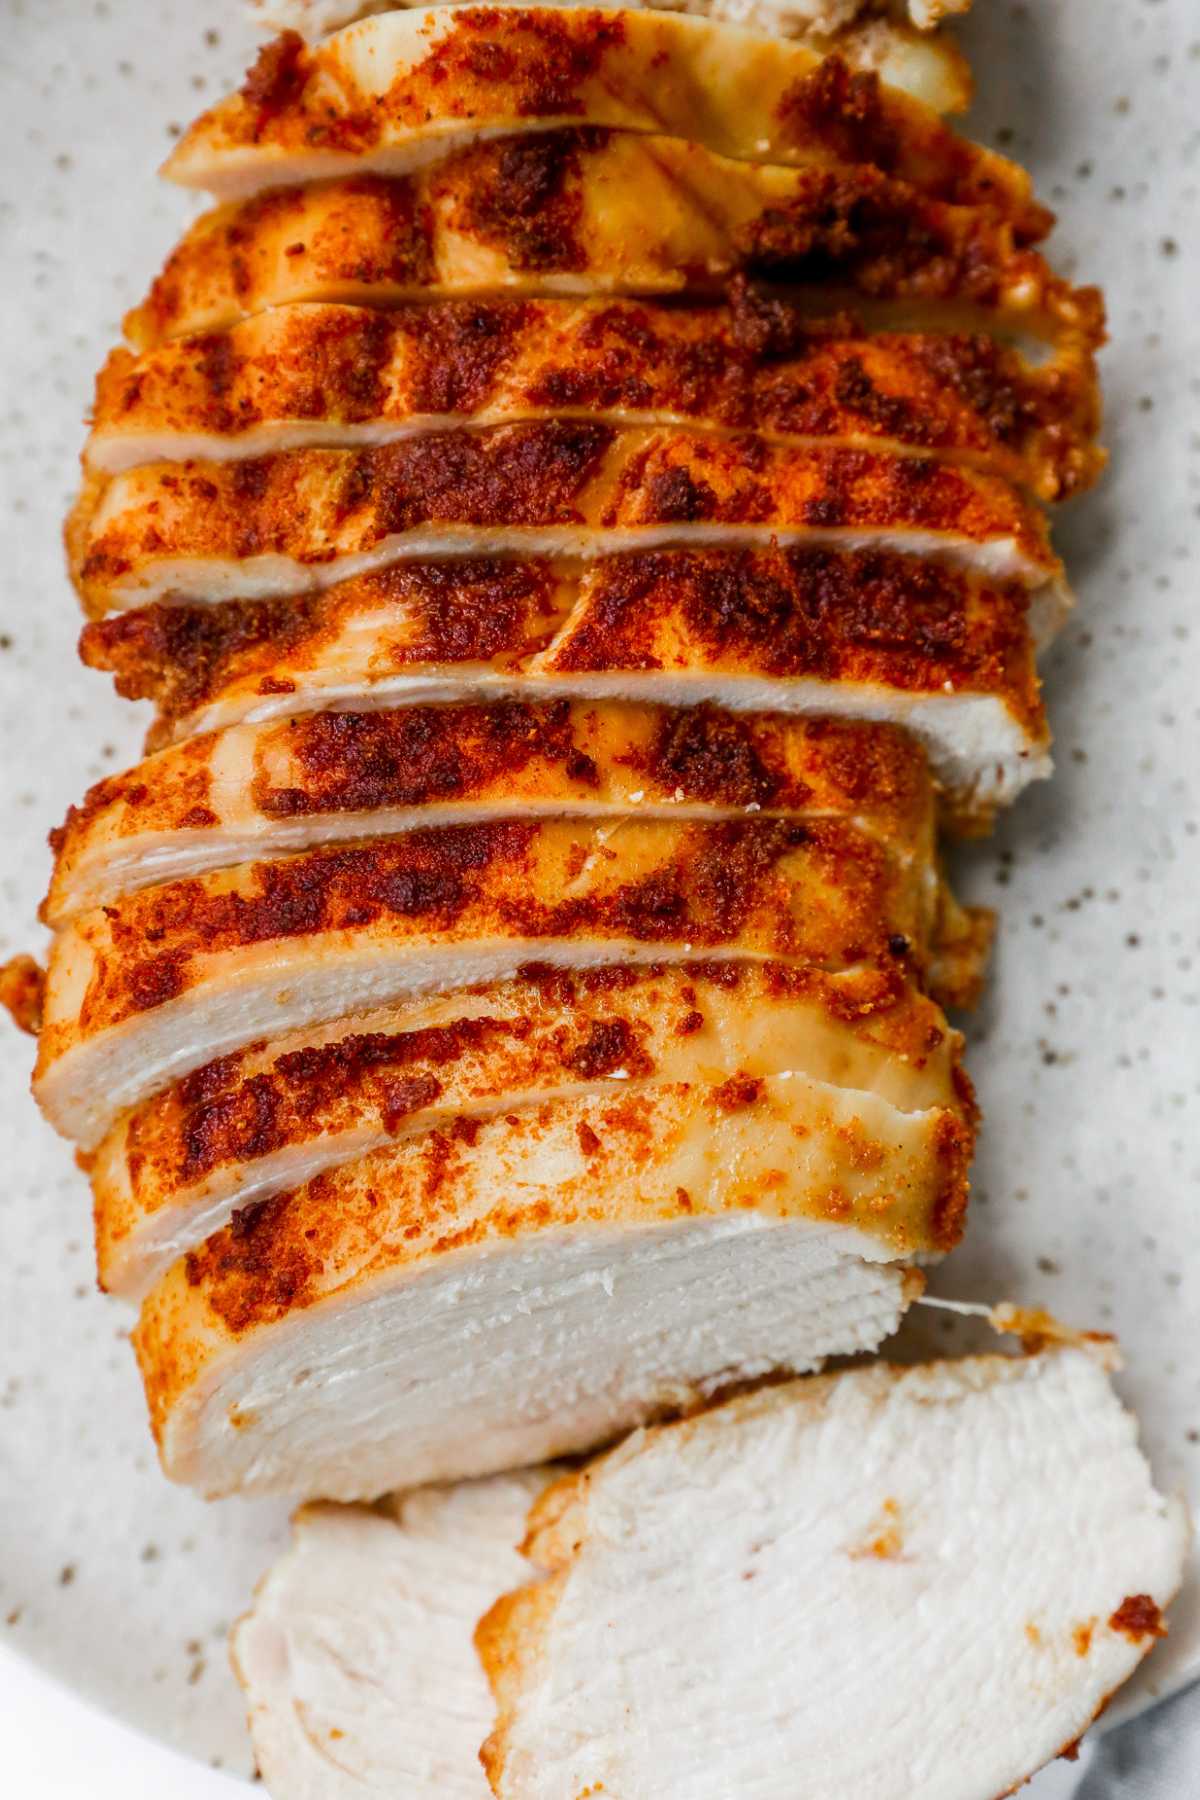 Sliced, seasoned baked chicken on a white plate.